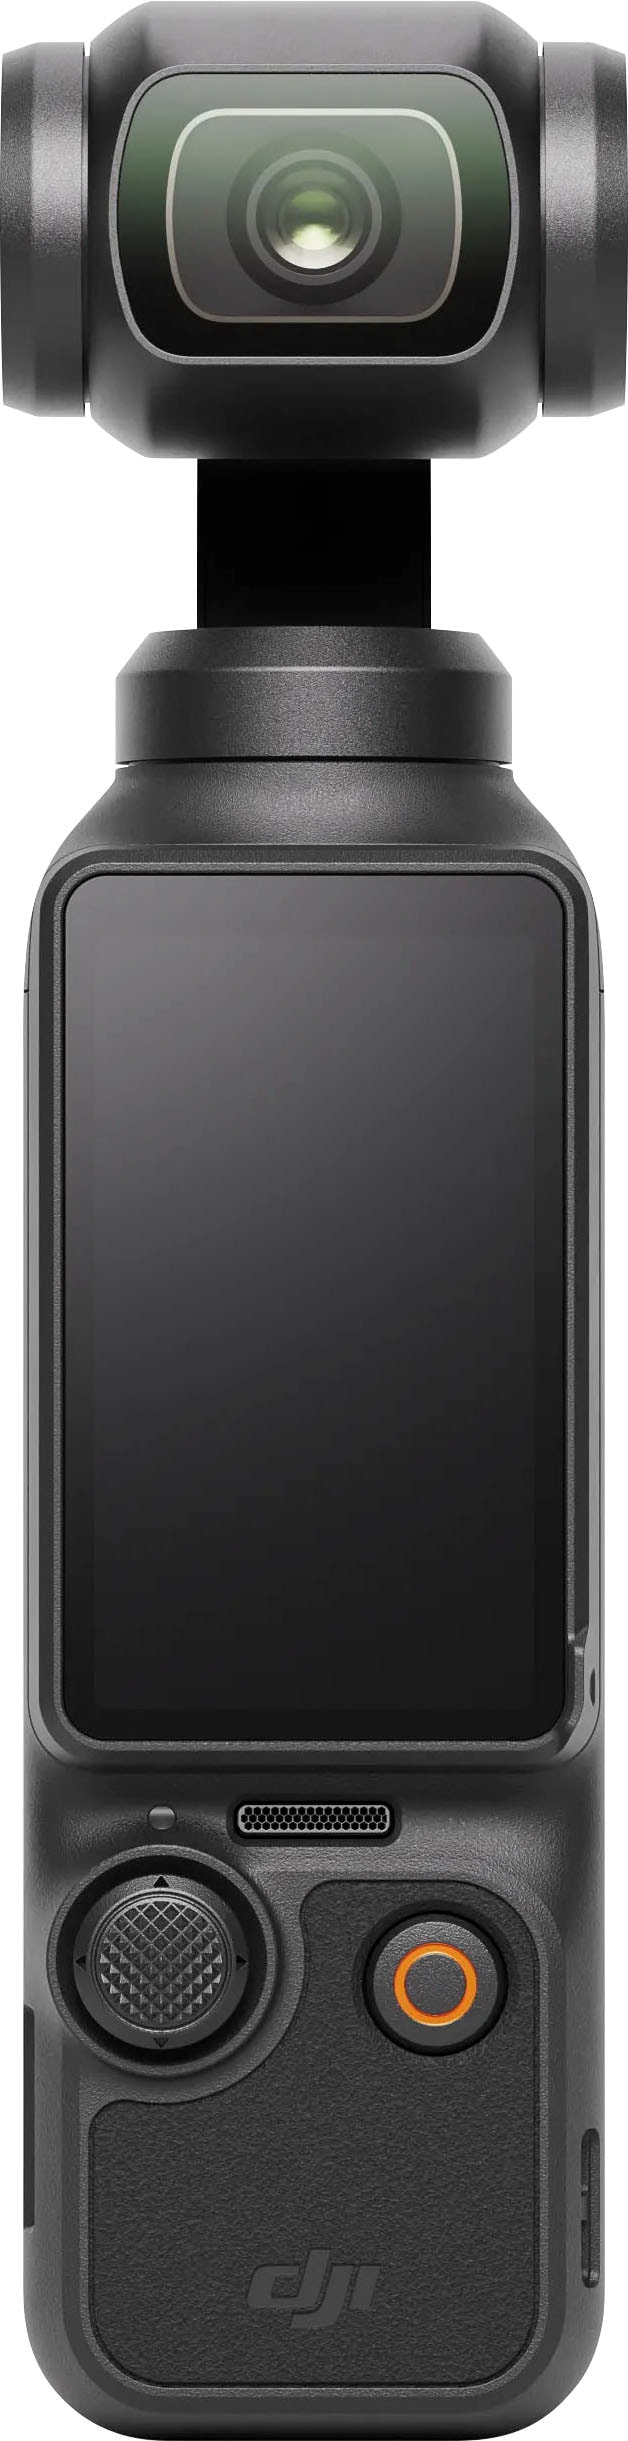 DJI Camcorder »Osmo Pocket 3« 4K Ultra HD ...